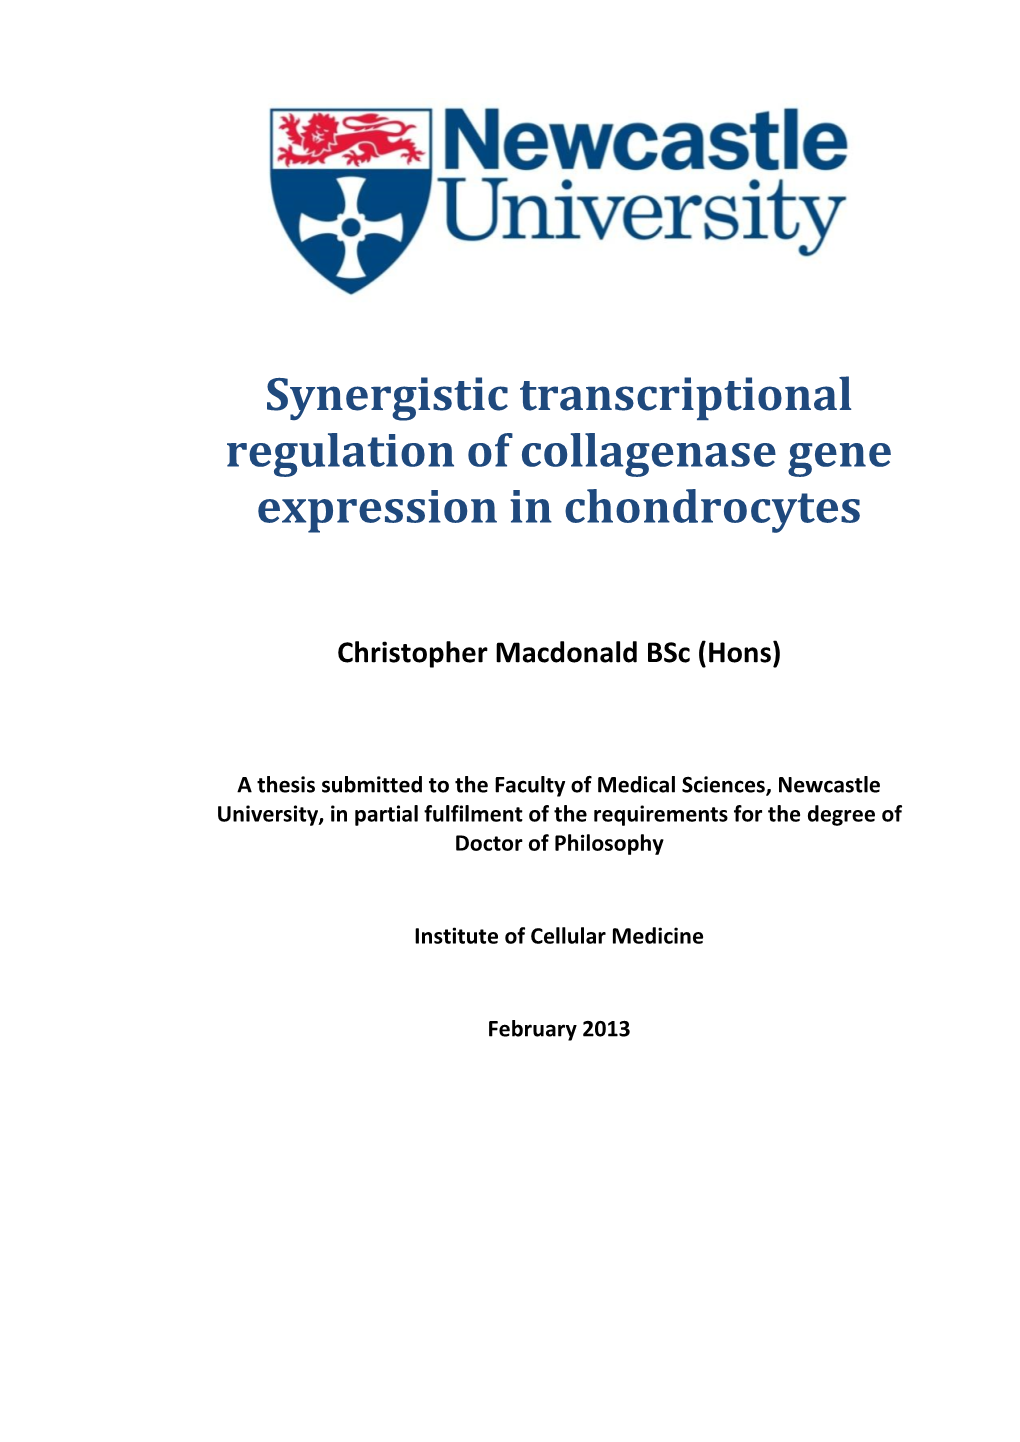 Synergistic Transcriptional Regulation of Collagenase Gene Expression in Chondrocytes